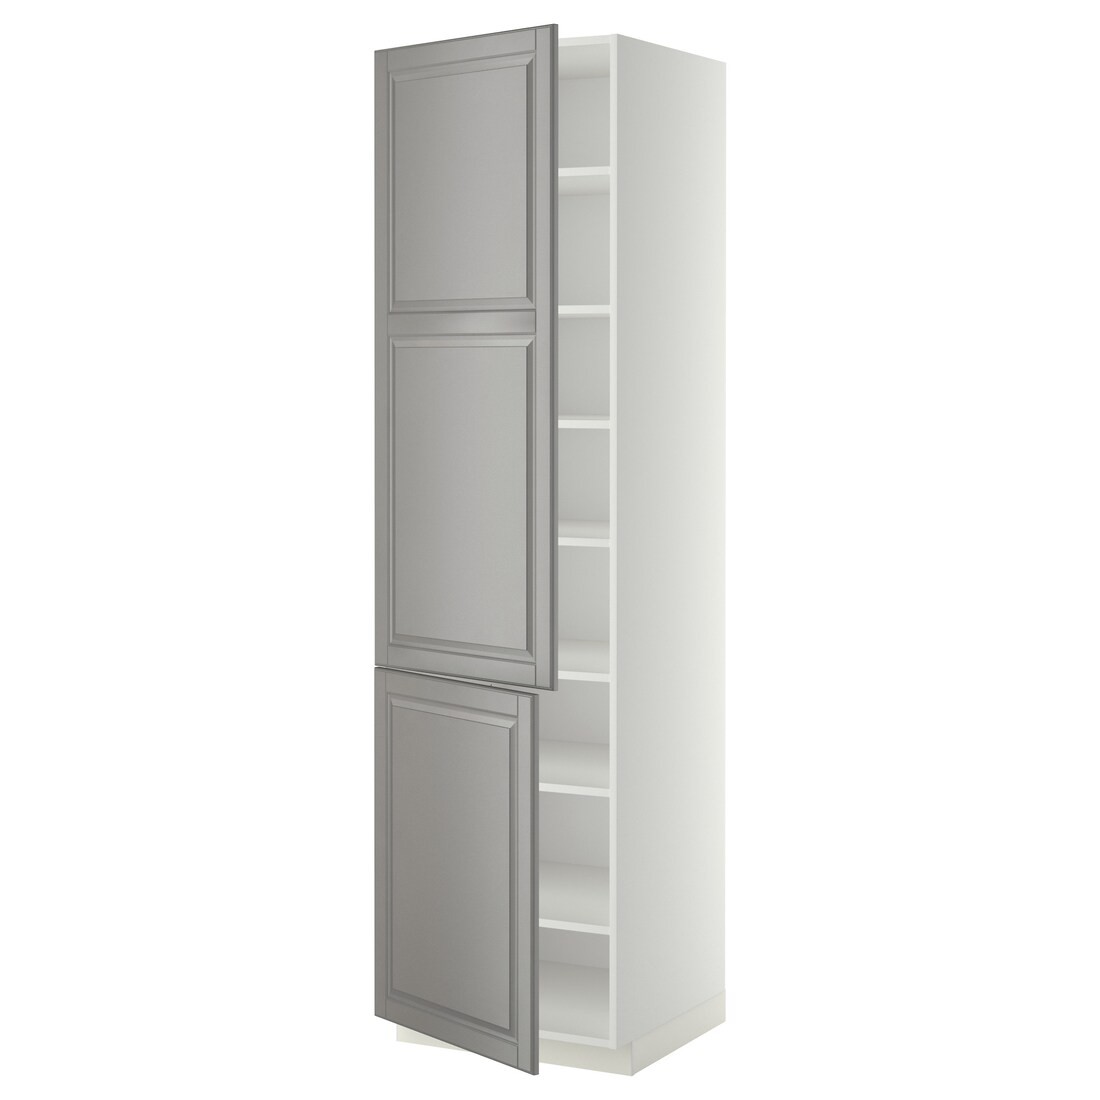 METOD МЕТОД Высокий шкаф с полками / 2 дверцы, белый / Bodbyn серый, 60x60x220 см